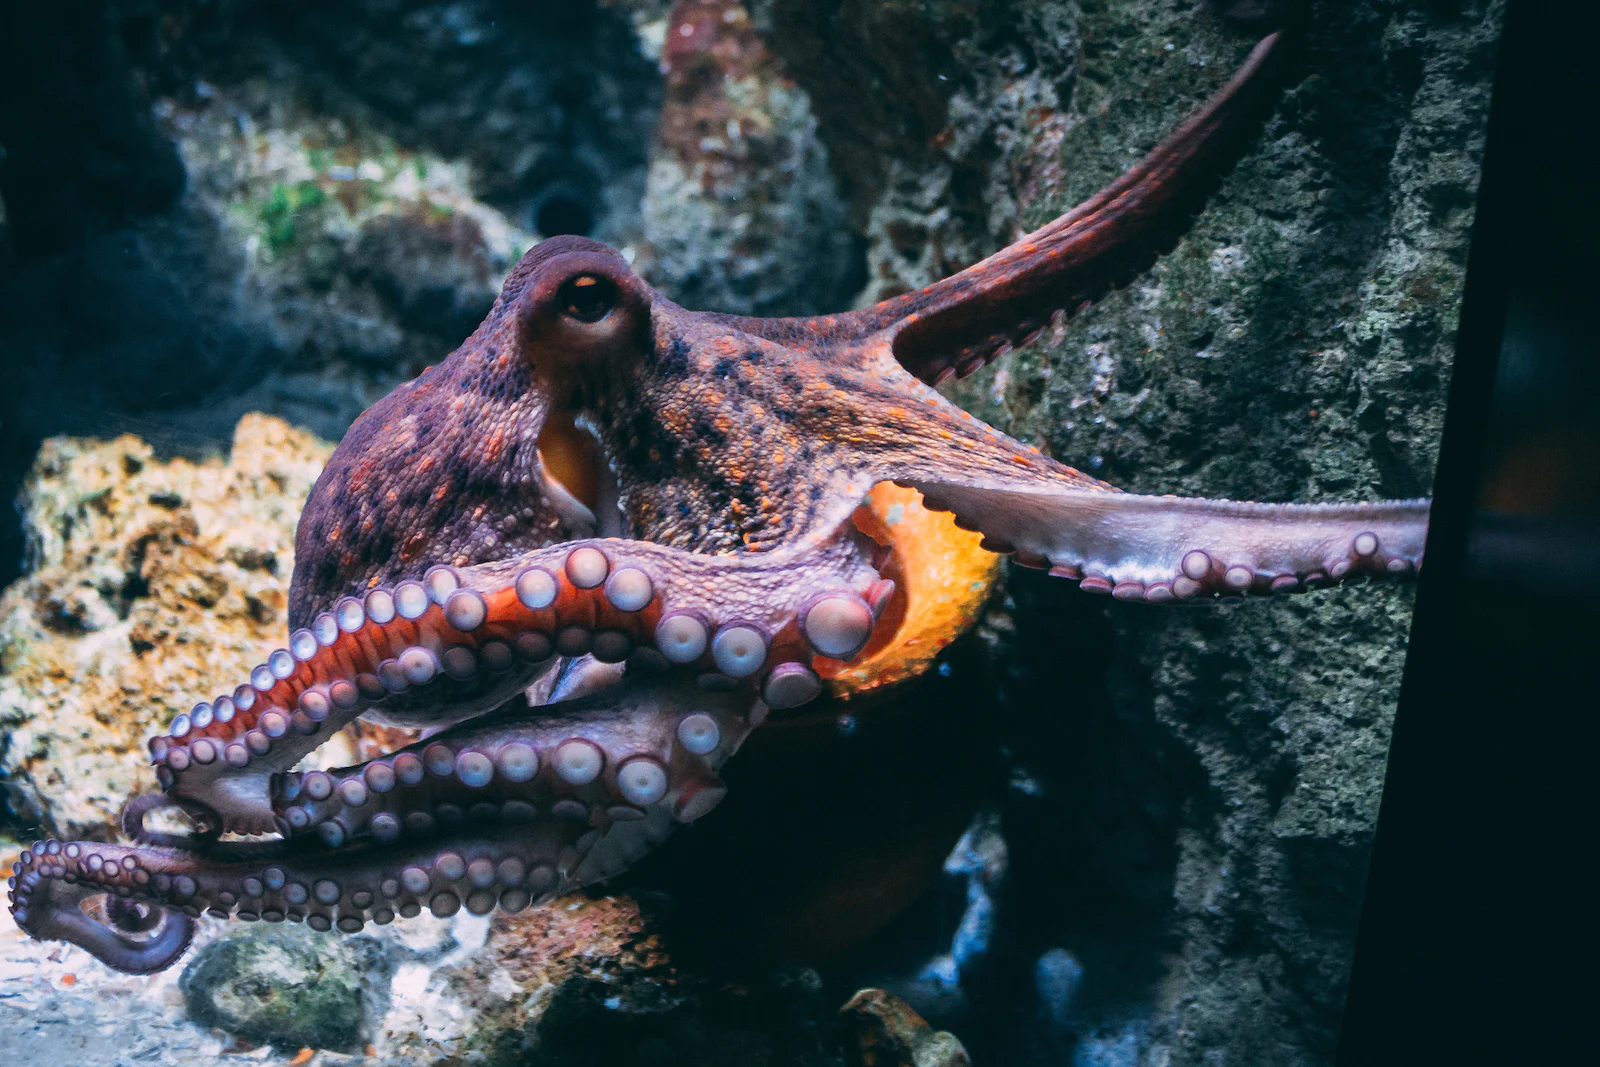 Octopus fishing season lower than average in Progreso, Yucatán